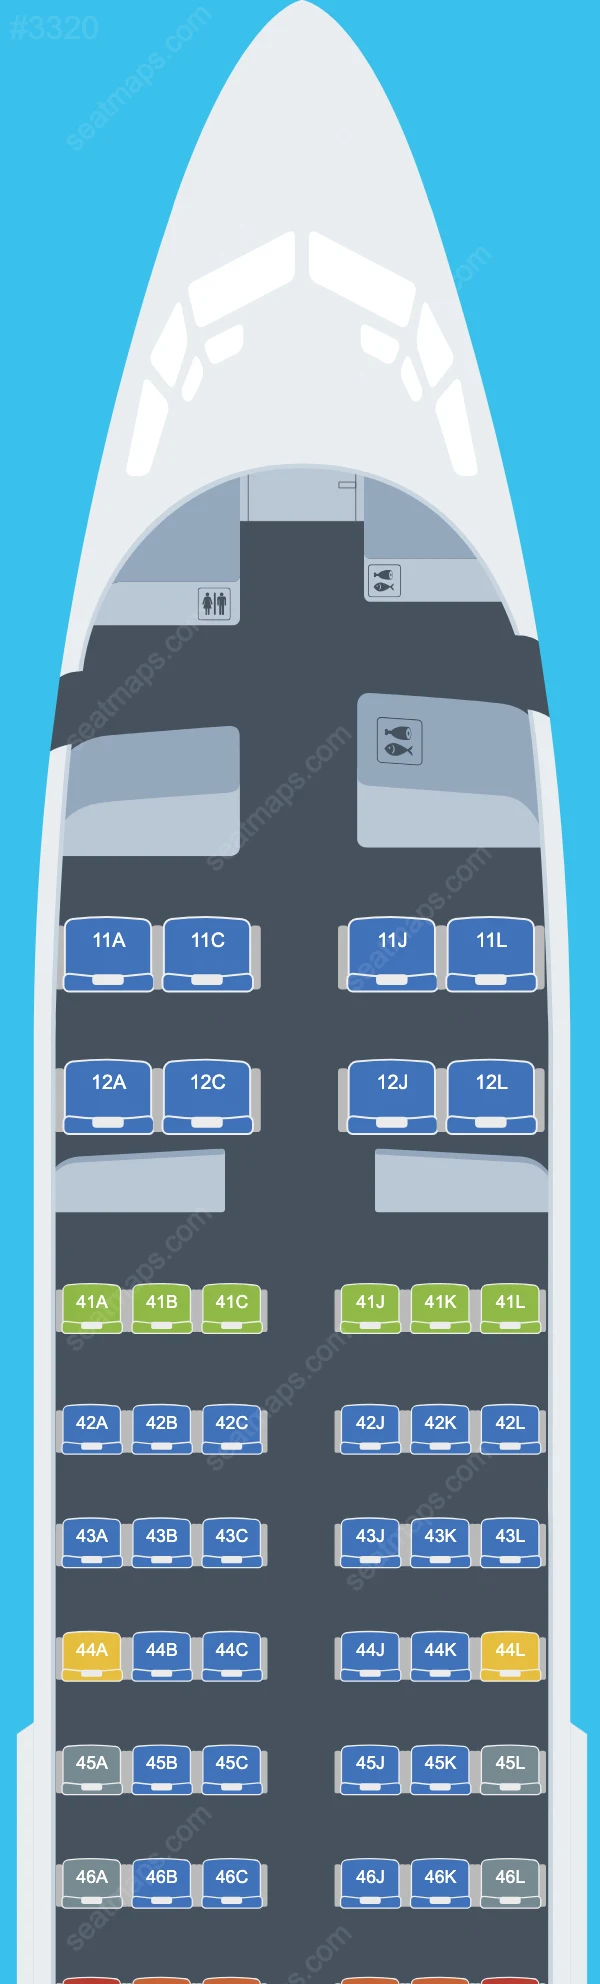 XiamenAir Boeing 737 Seat Maps 737-700